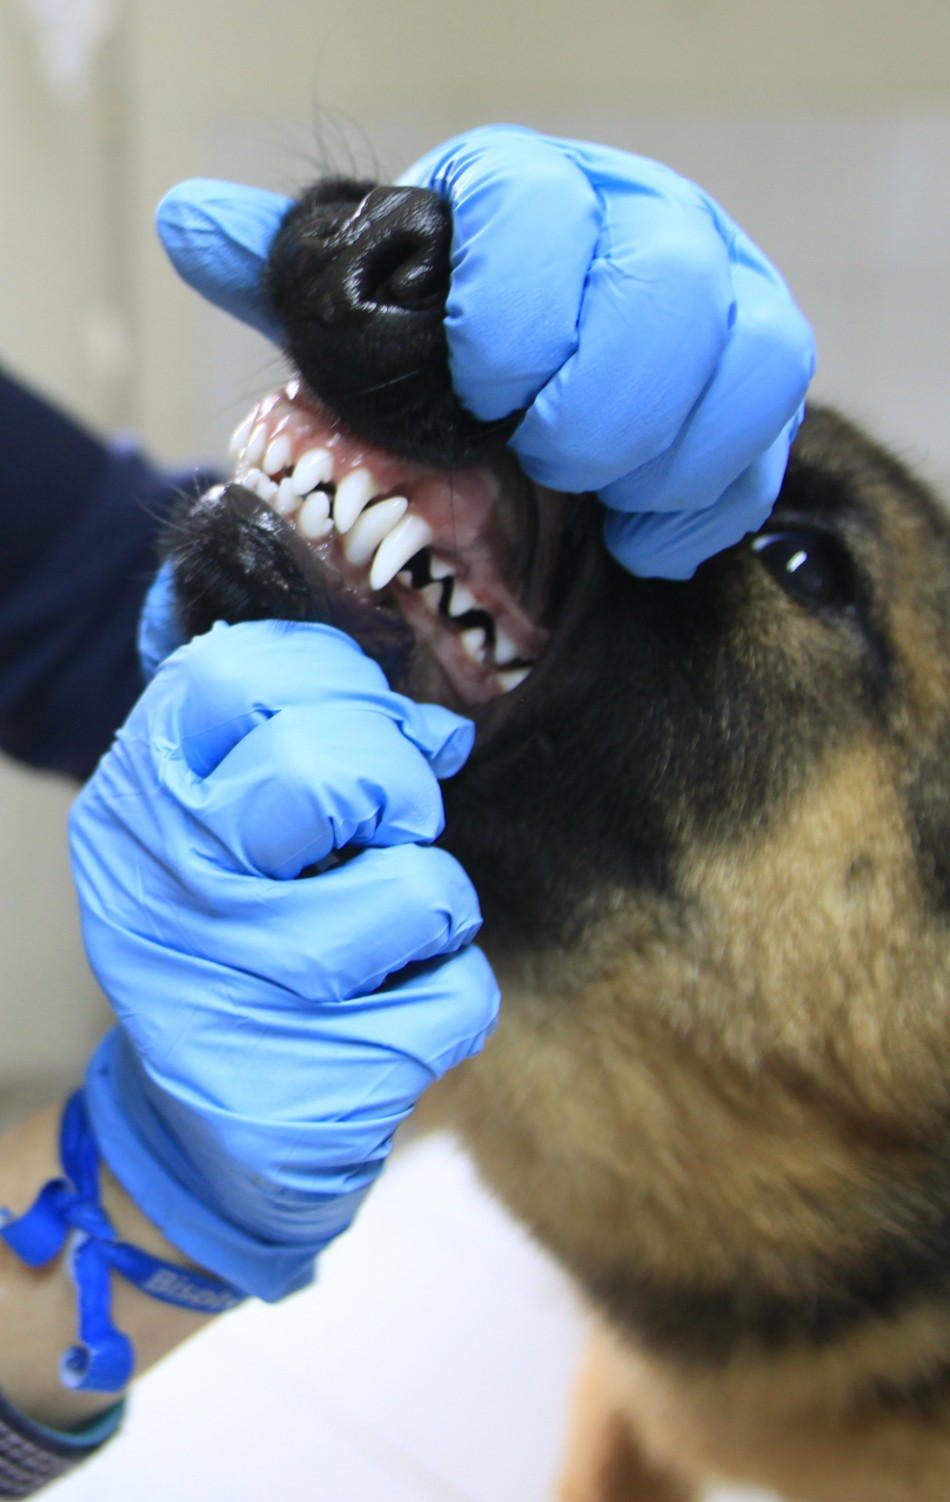 Animals Visit the Dentist